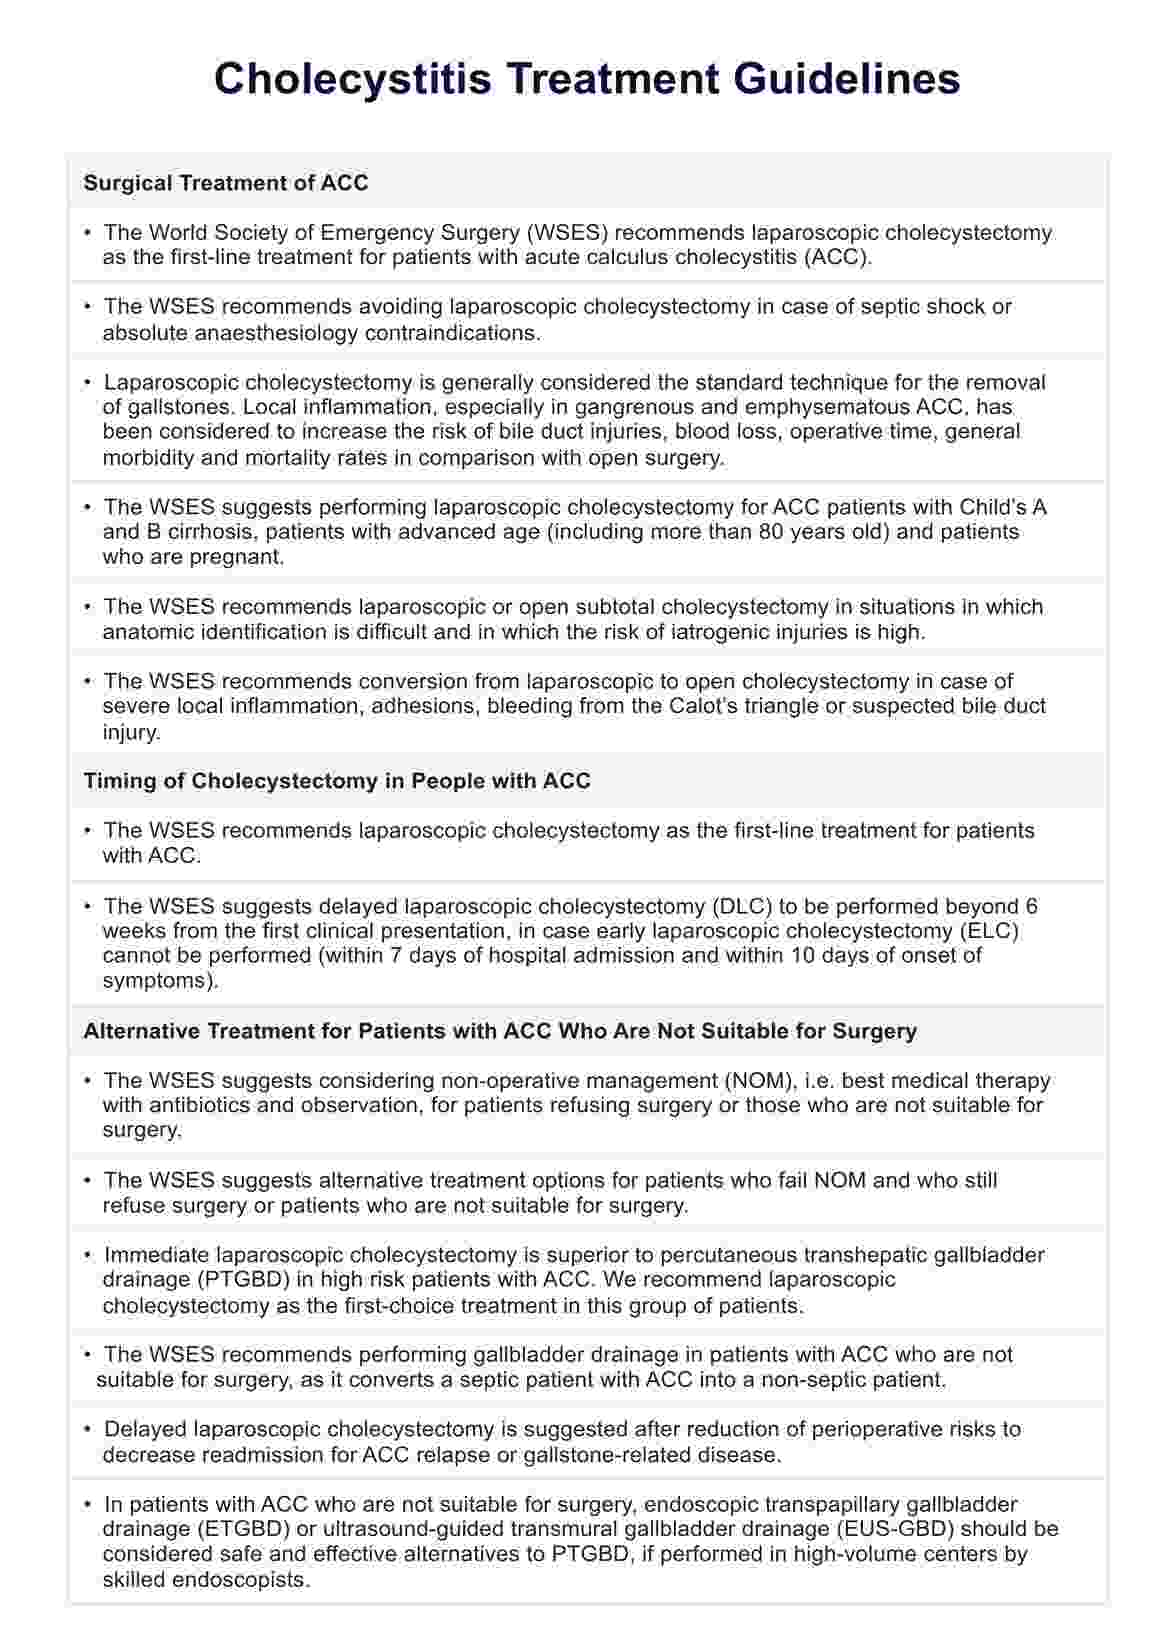 Cholecystitis Treatment Guidelines PDF Example